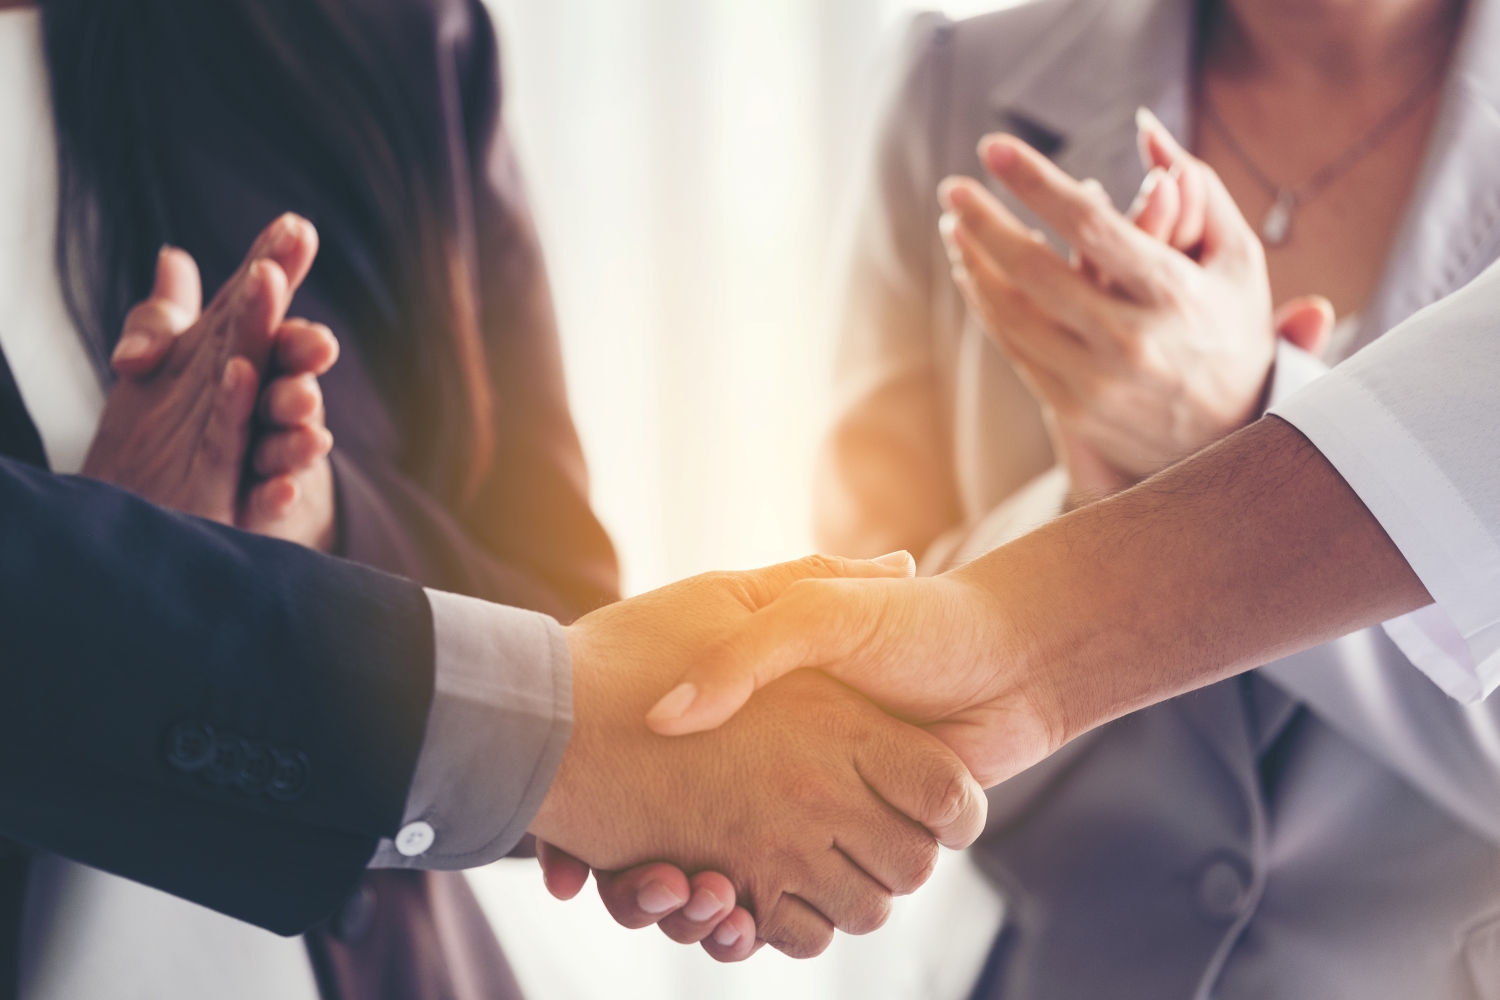 Businessmen making handshake - business etiquette, congratulation, merger